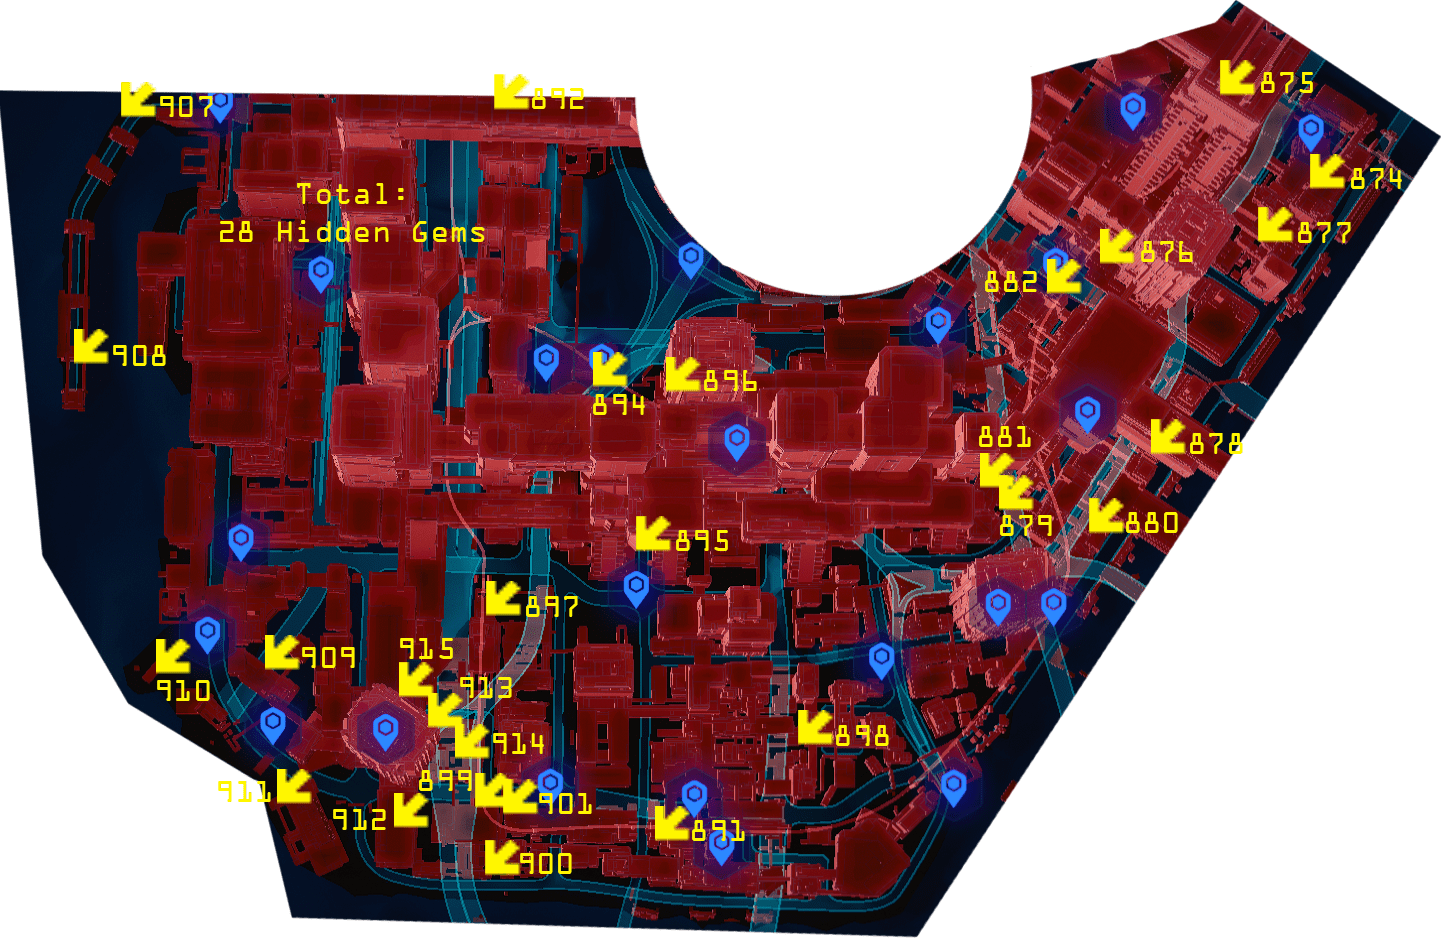 Cyberpunk 2077 - Hidden Gem Locations - 28 Heywood